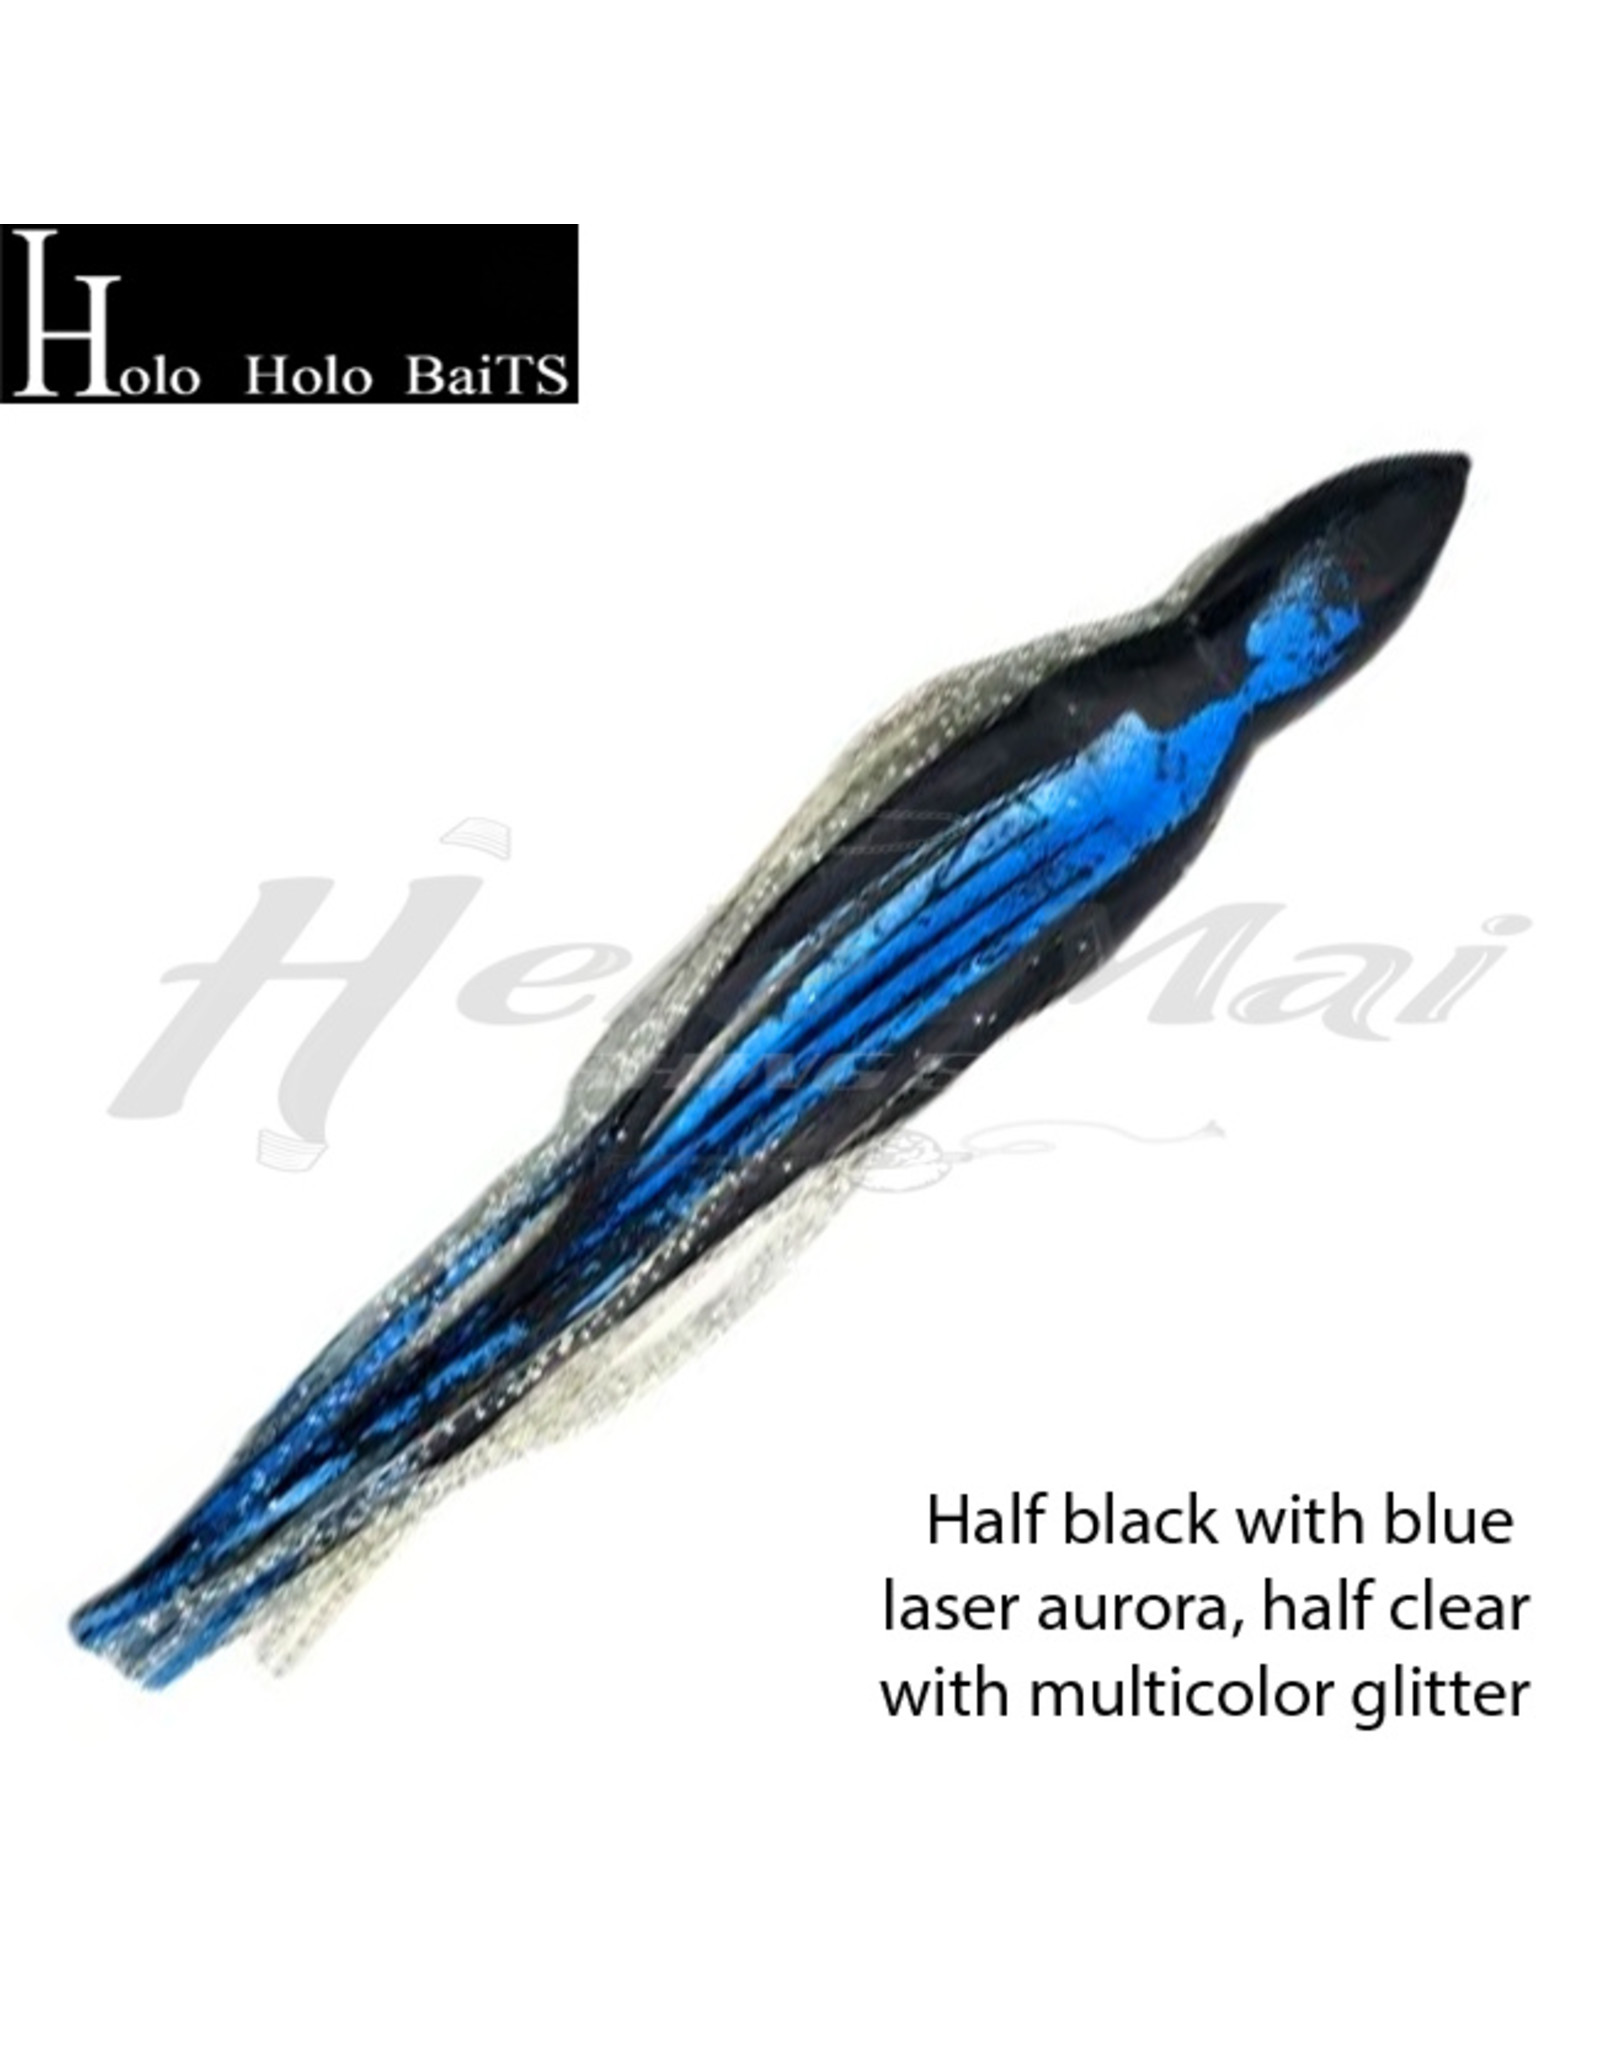 HOLO HOLO HAWAII (HHH) HH, 7" SQUID SKIRT BLUE FLASH SILVER GLITTER 1306